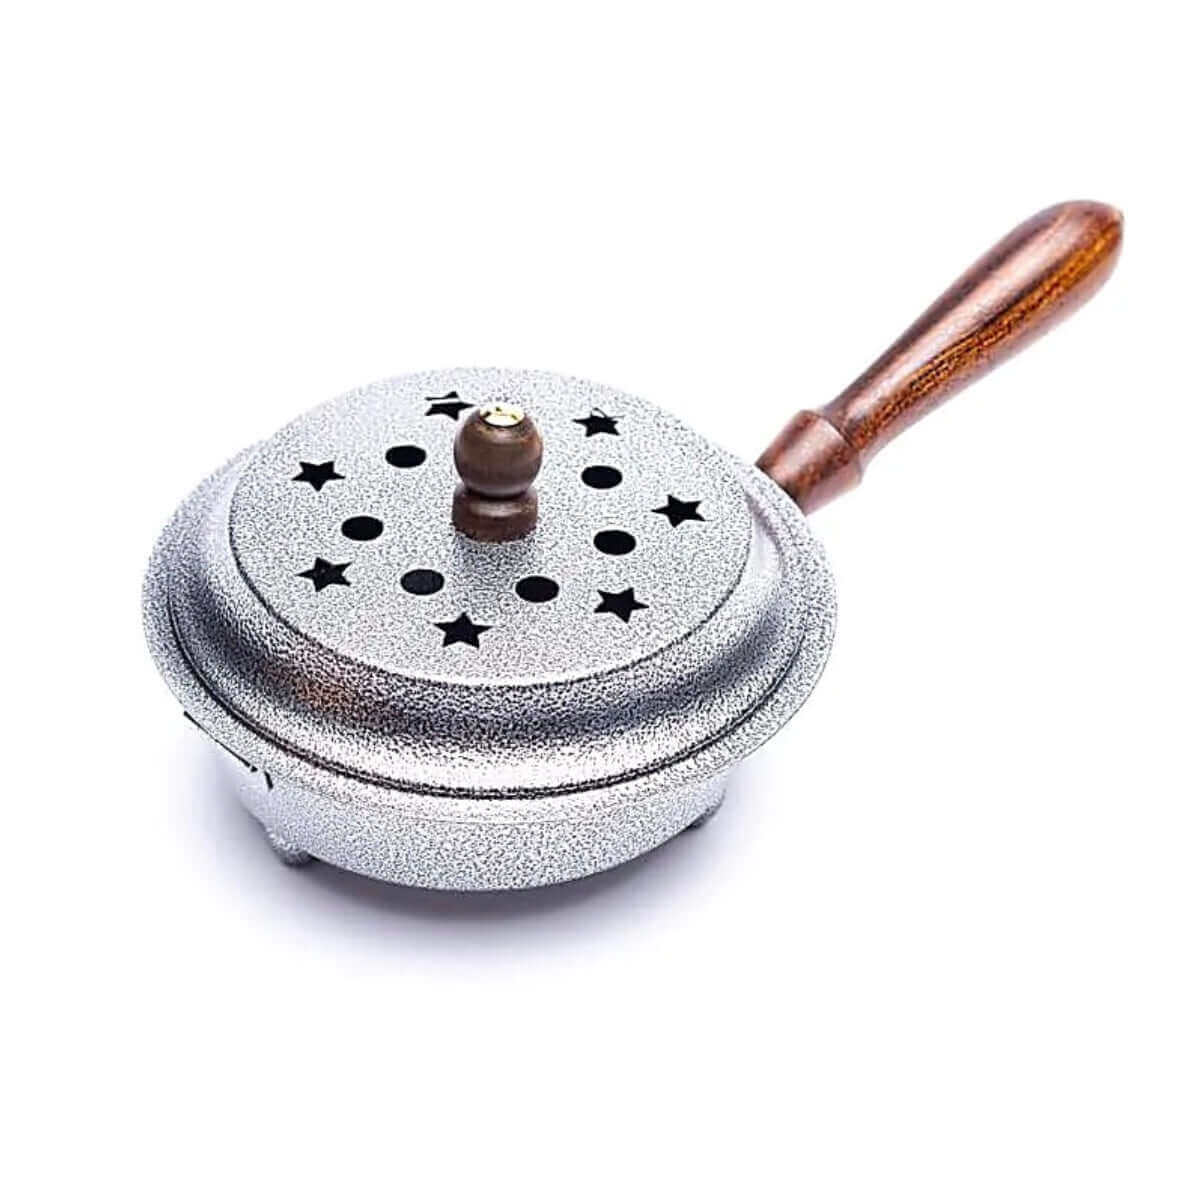 Iron Incense Burner Pan - Versatile incense stick holder